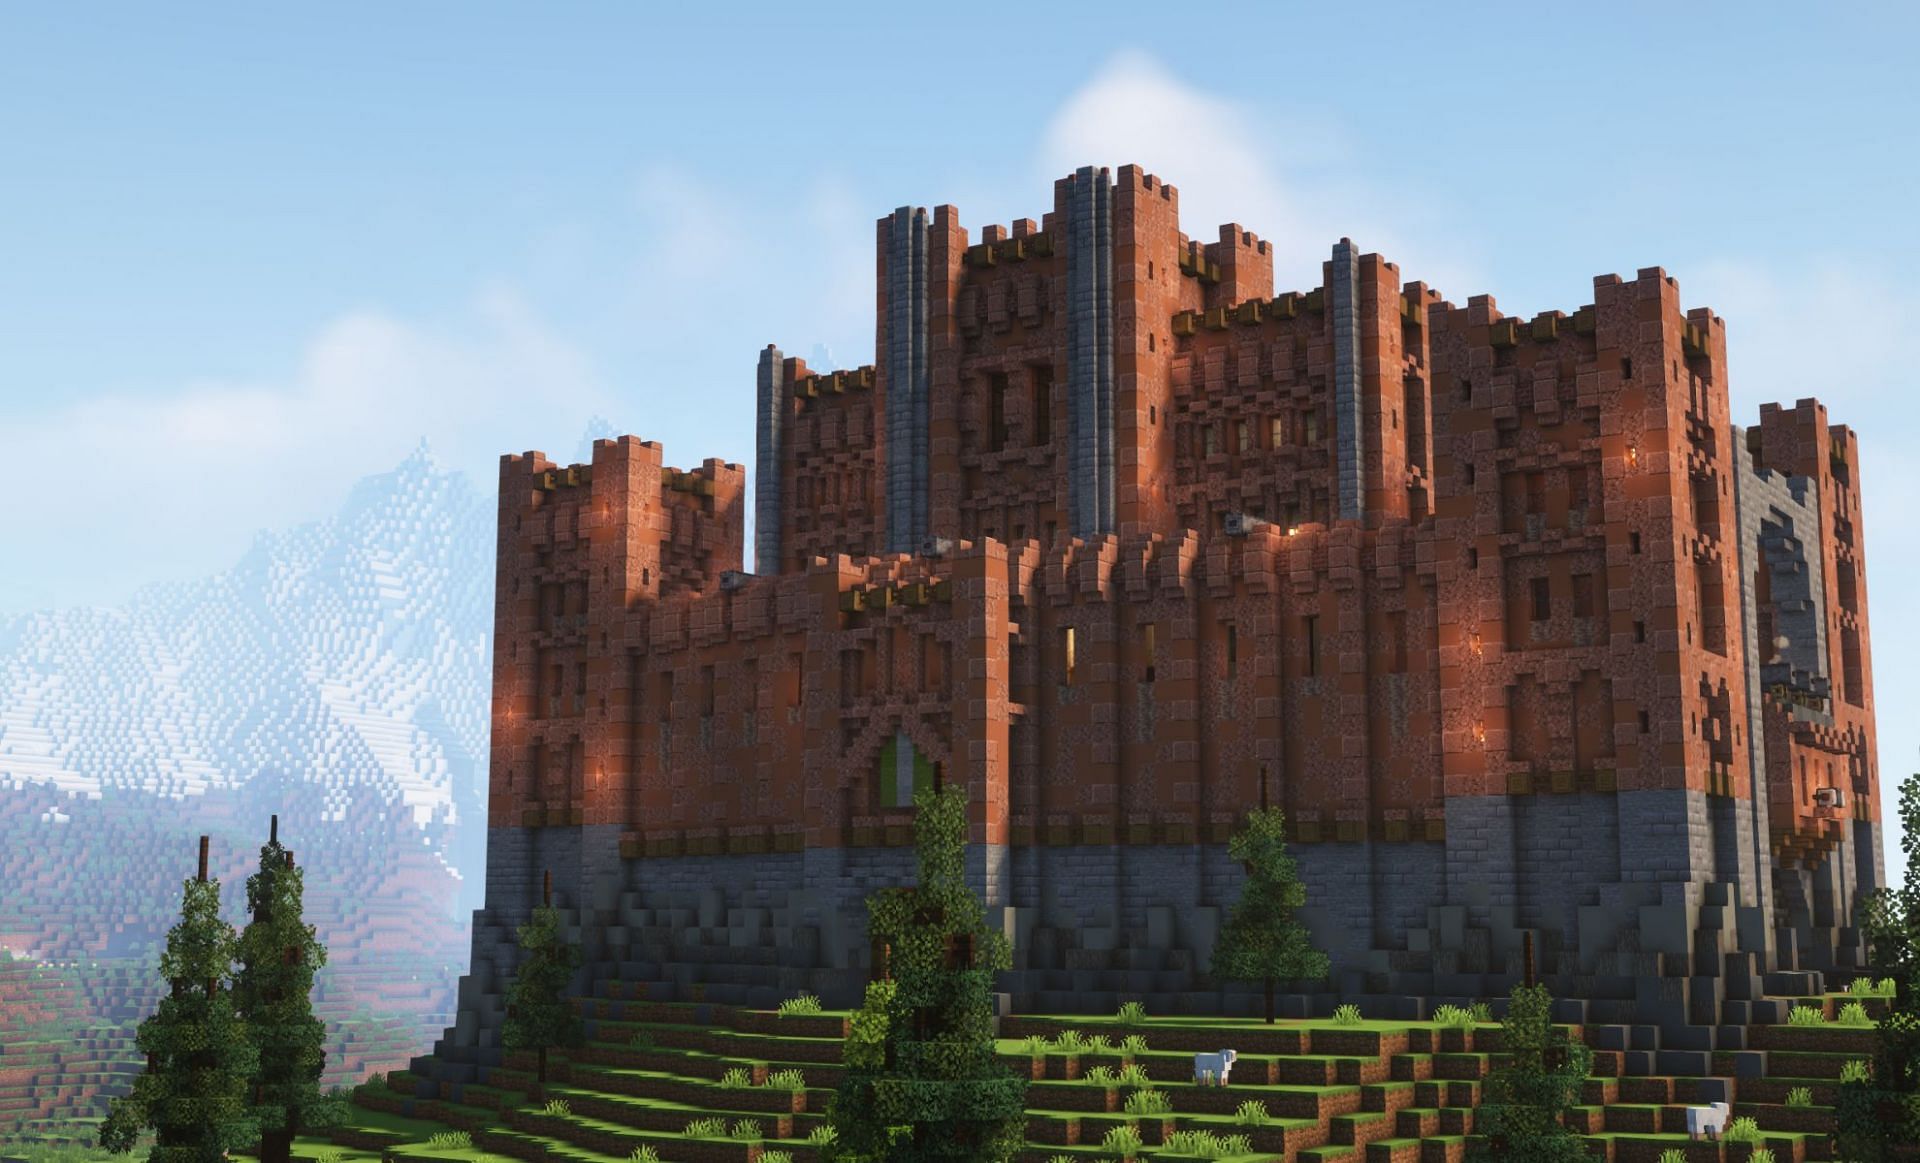 Survival castle (Image via u/PoisonPal24 on Reddit)